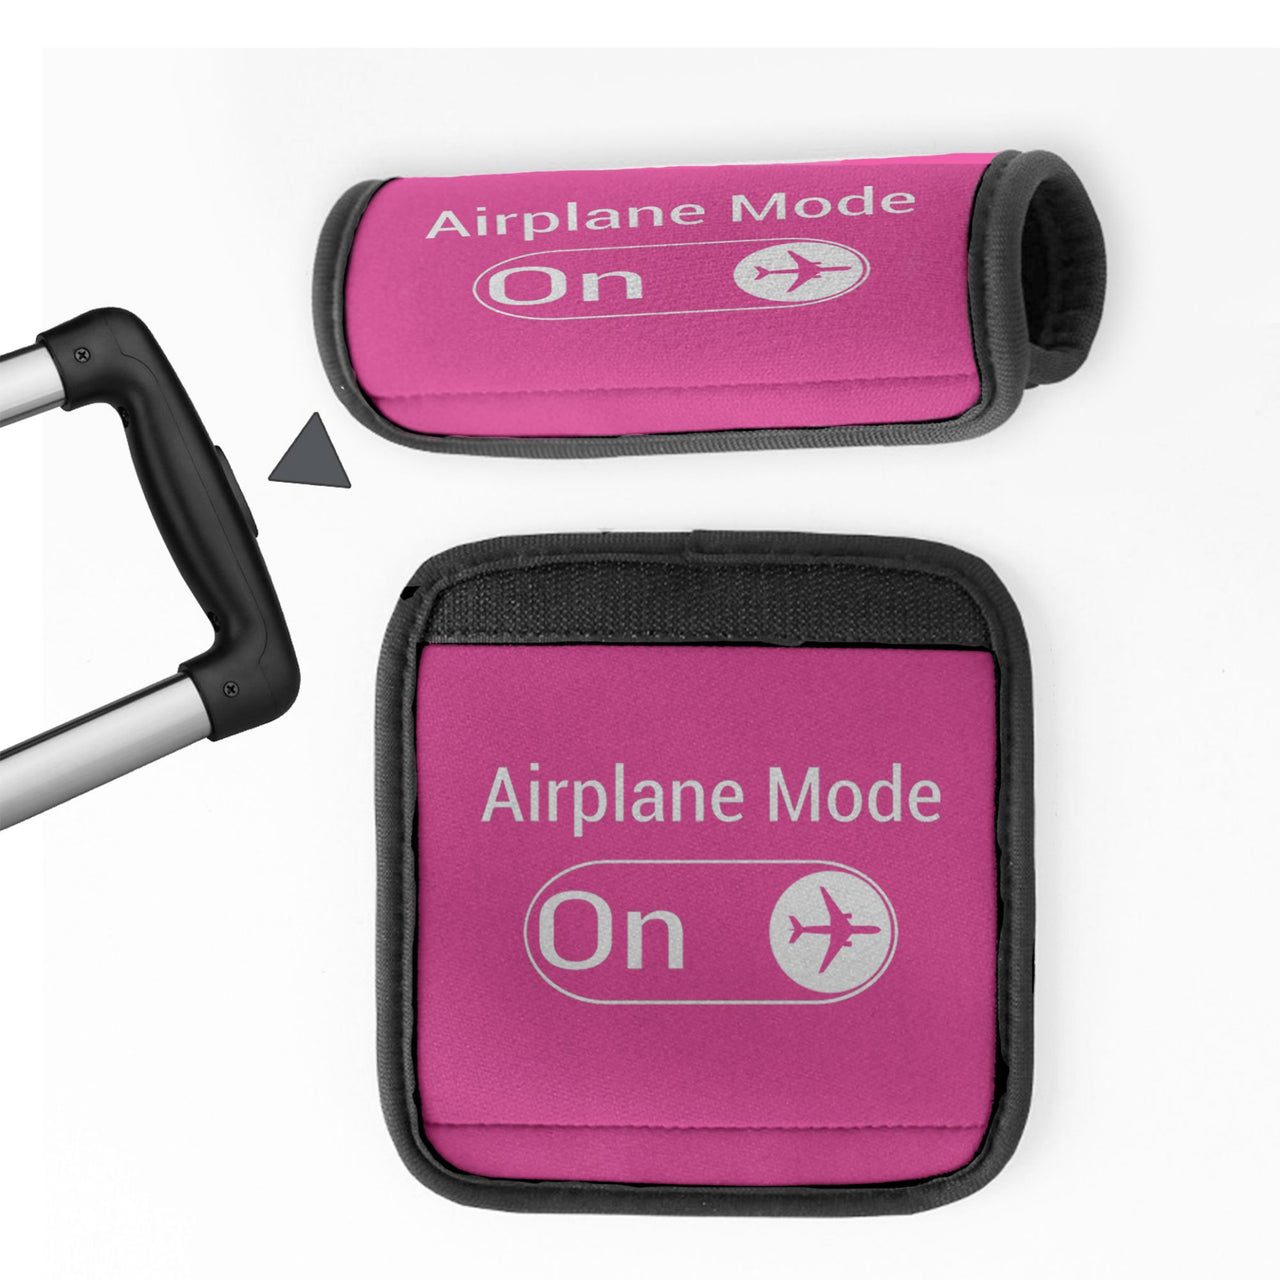 Airplane Mode On Designed Neoprene Luggage Handle Covers